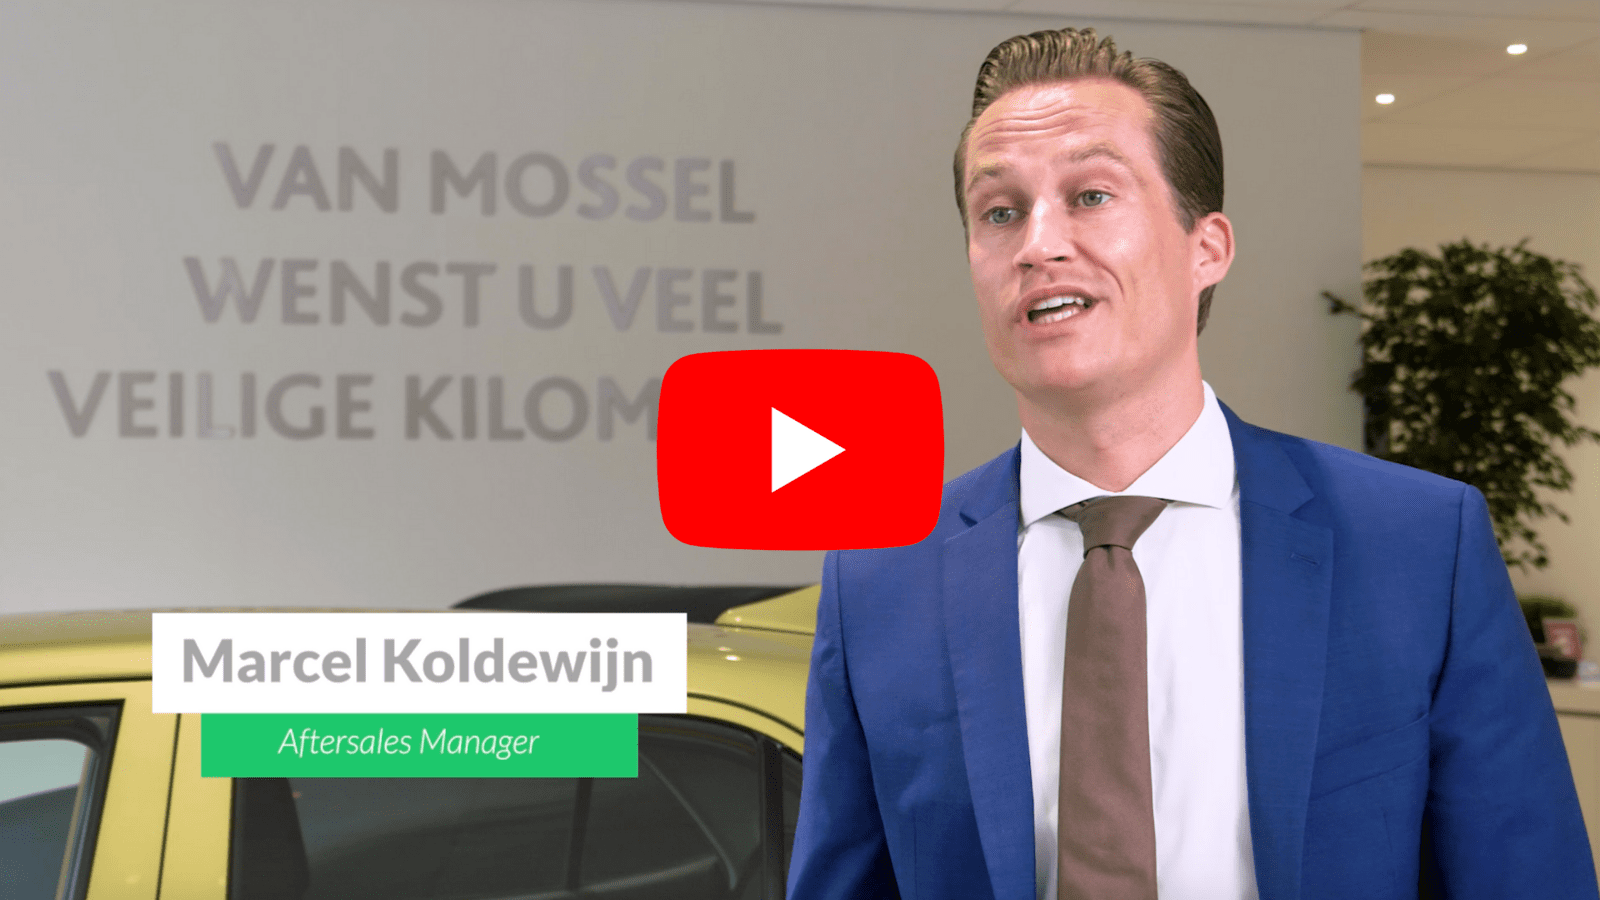 VIDEO: Success story 'Van Mossel Kia' 